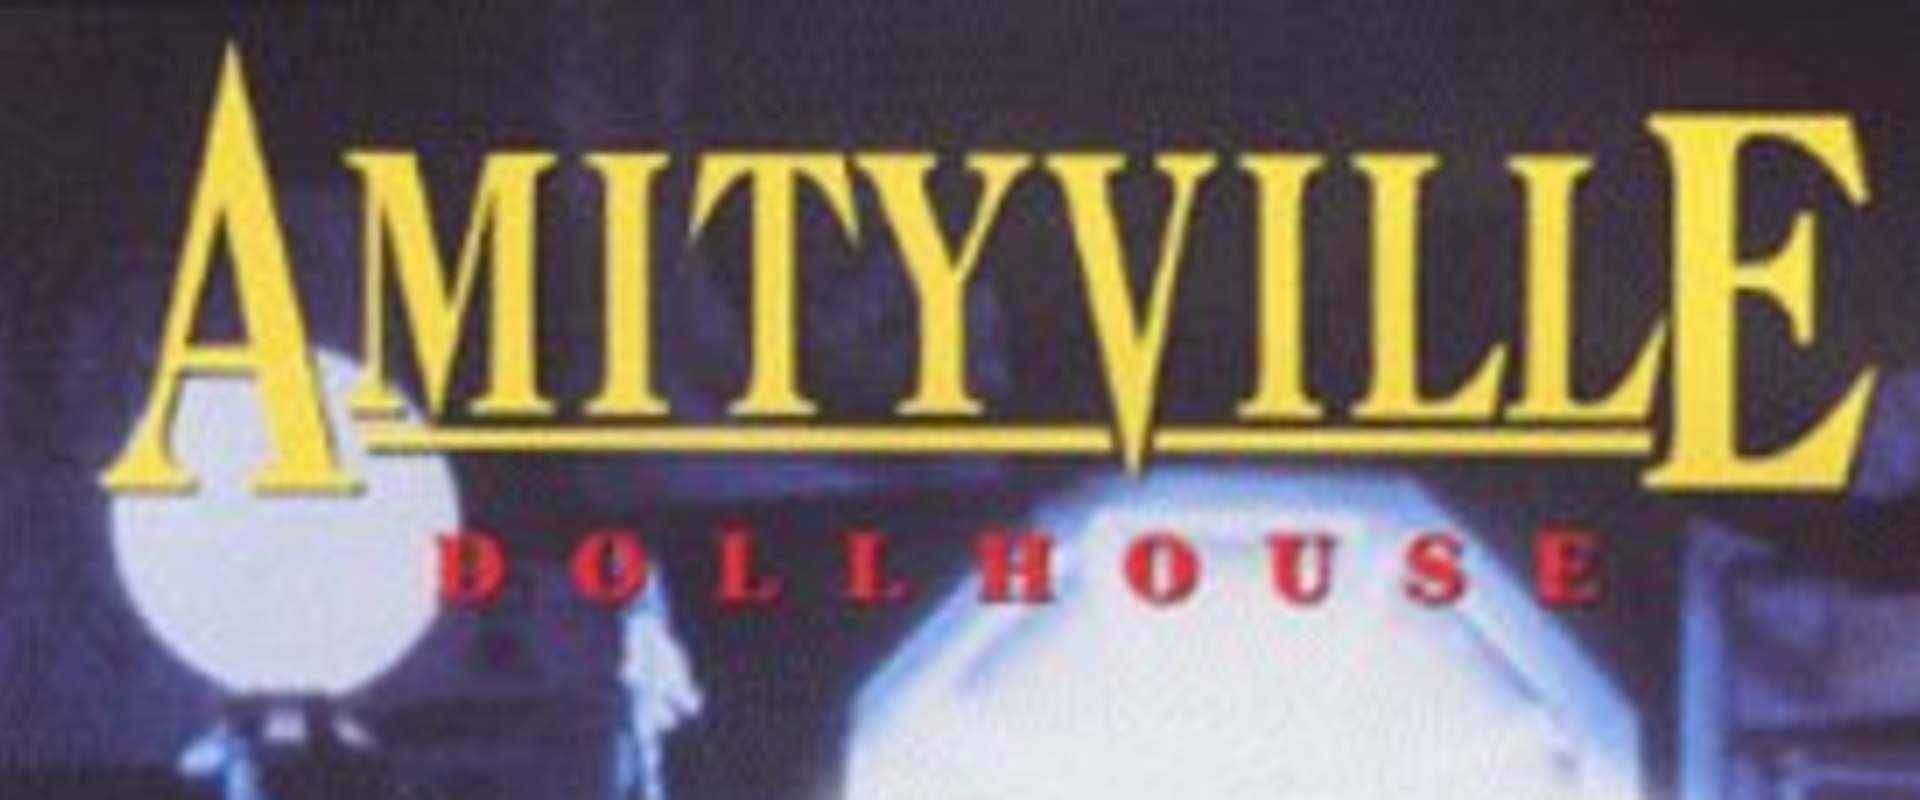 Amityville: Dollhouse background 2